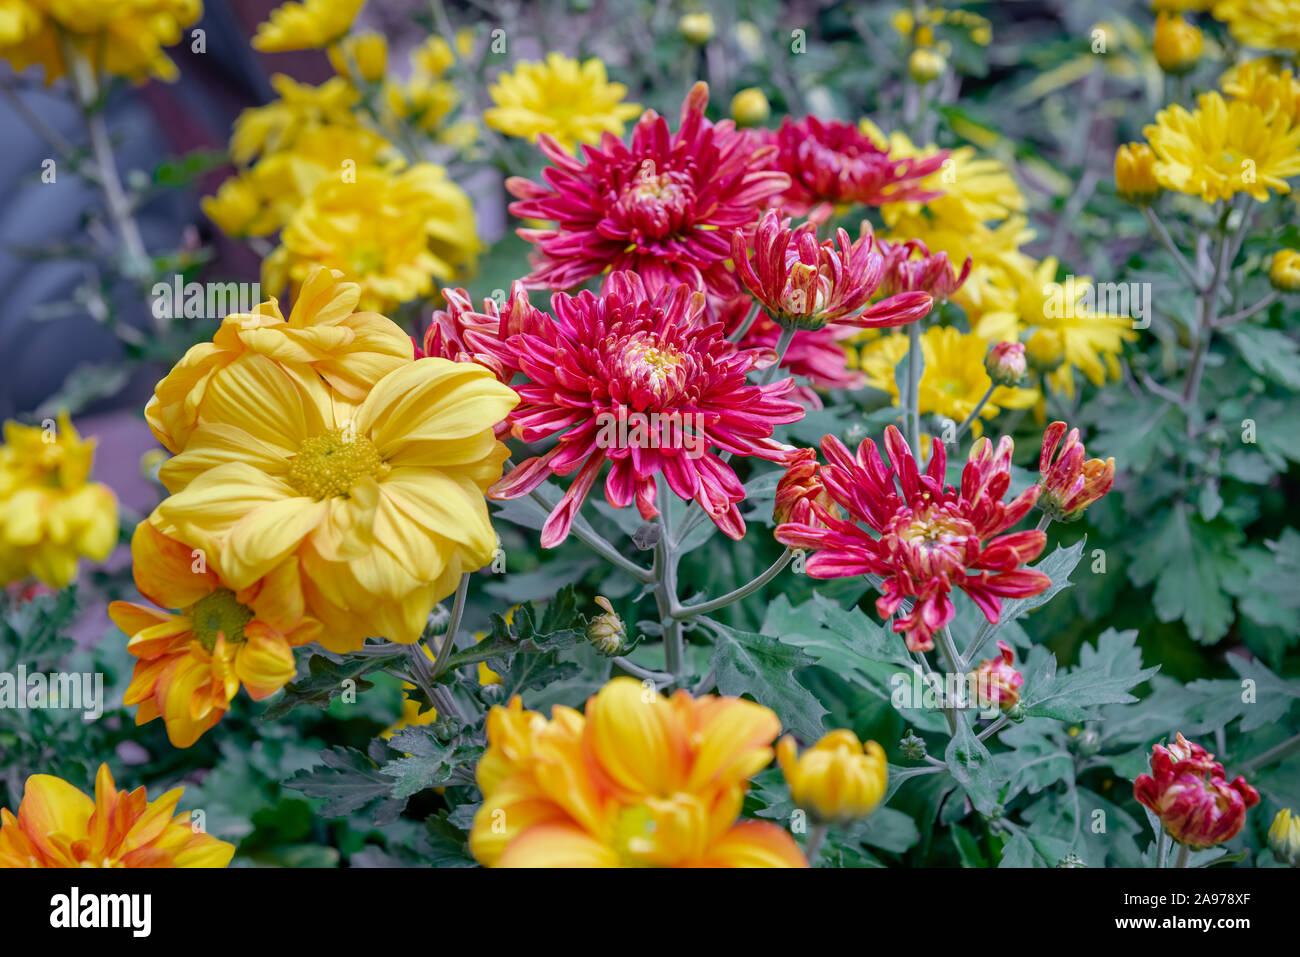 Beautiful Chrysanthemum flowers blooming in garden leaves garden outdoor red yellow Stock Photo